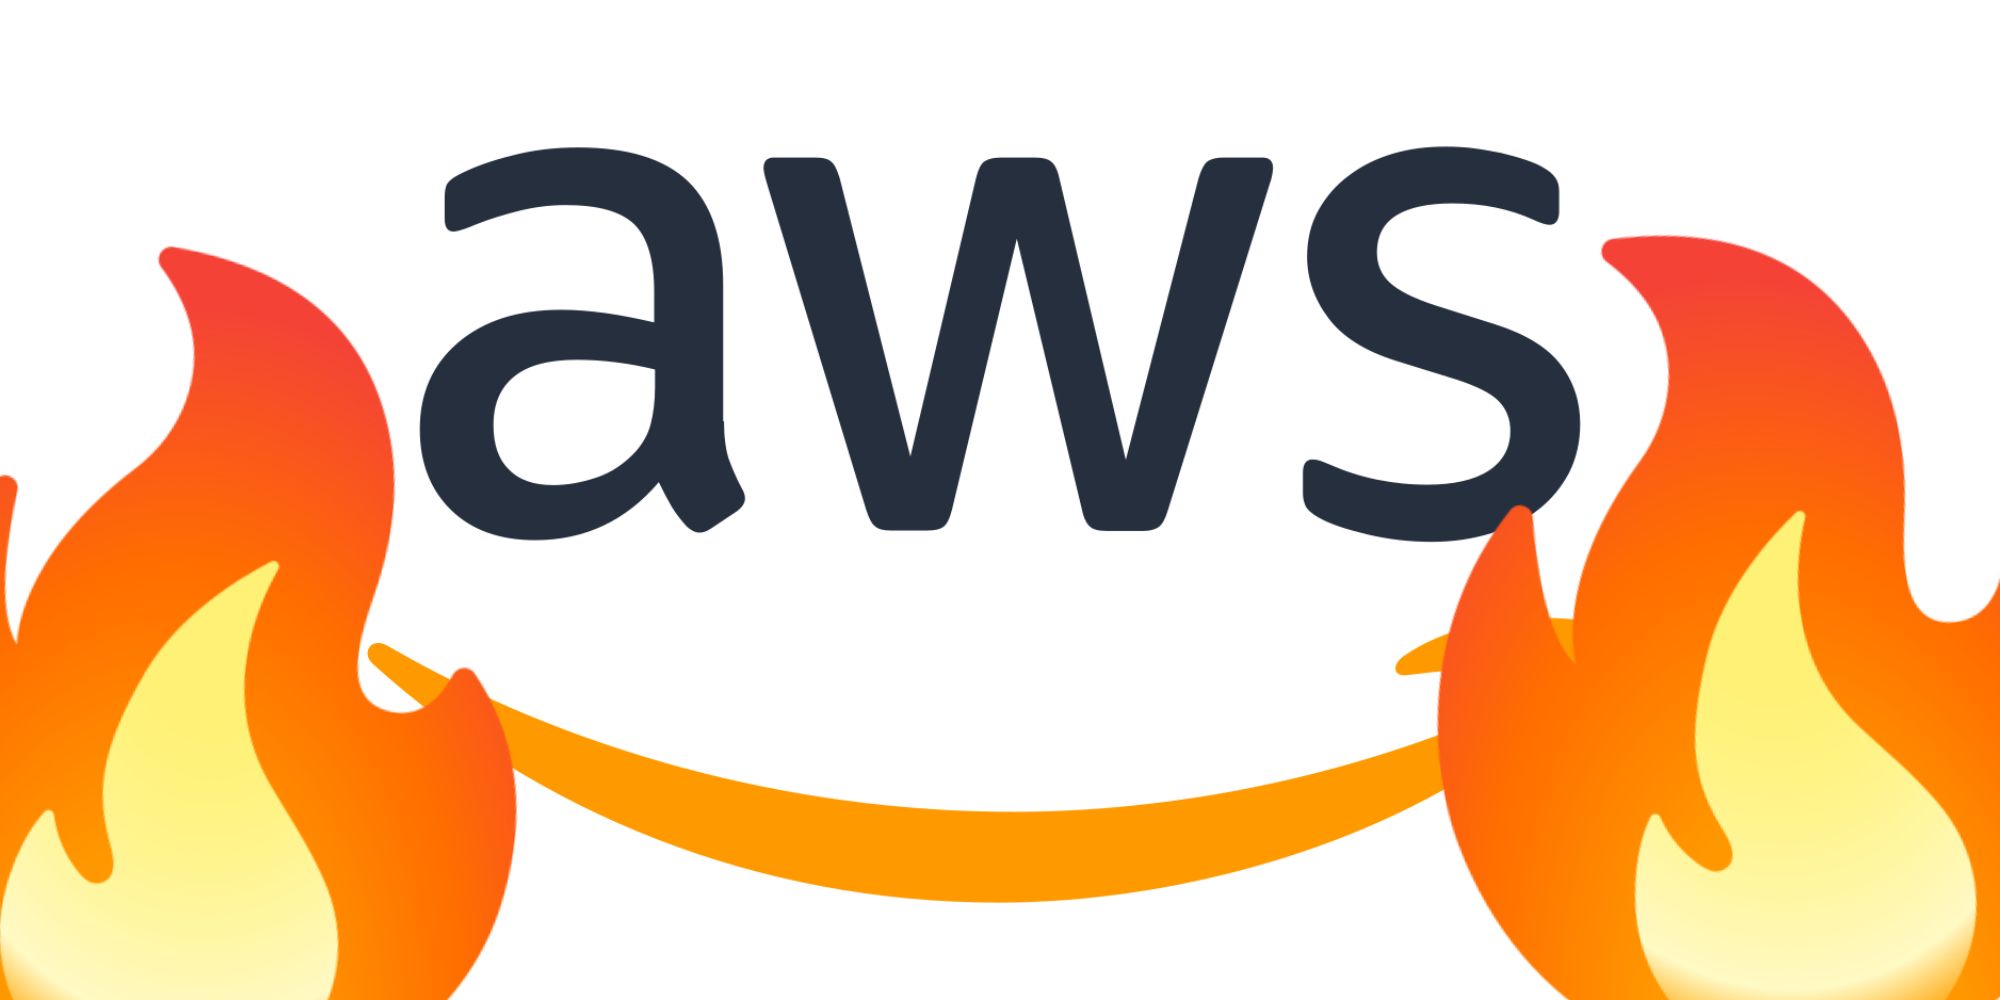 Amazon Web Services (AWS) logo with fire emoji next to it